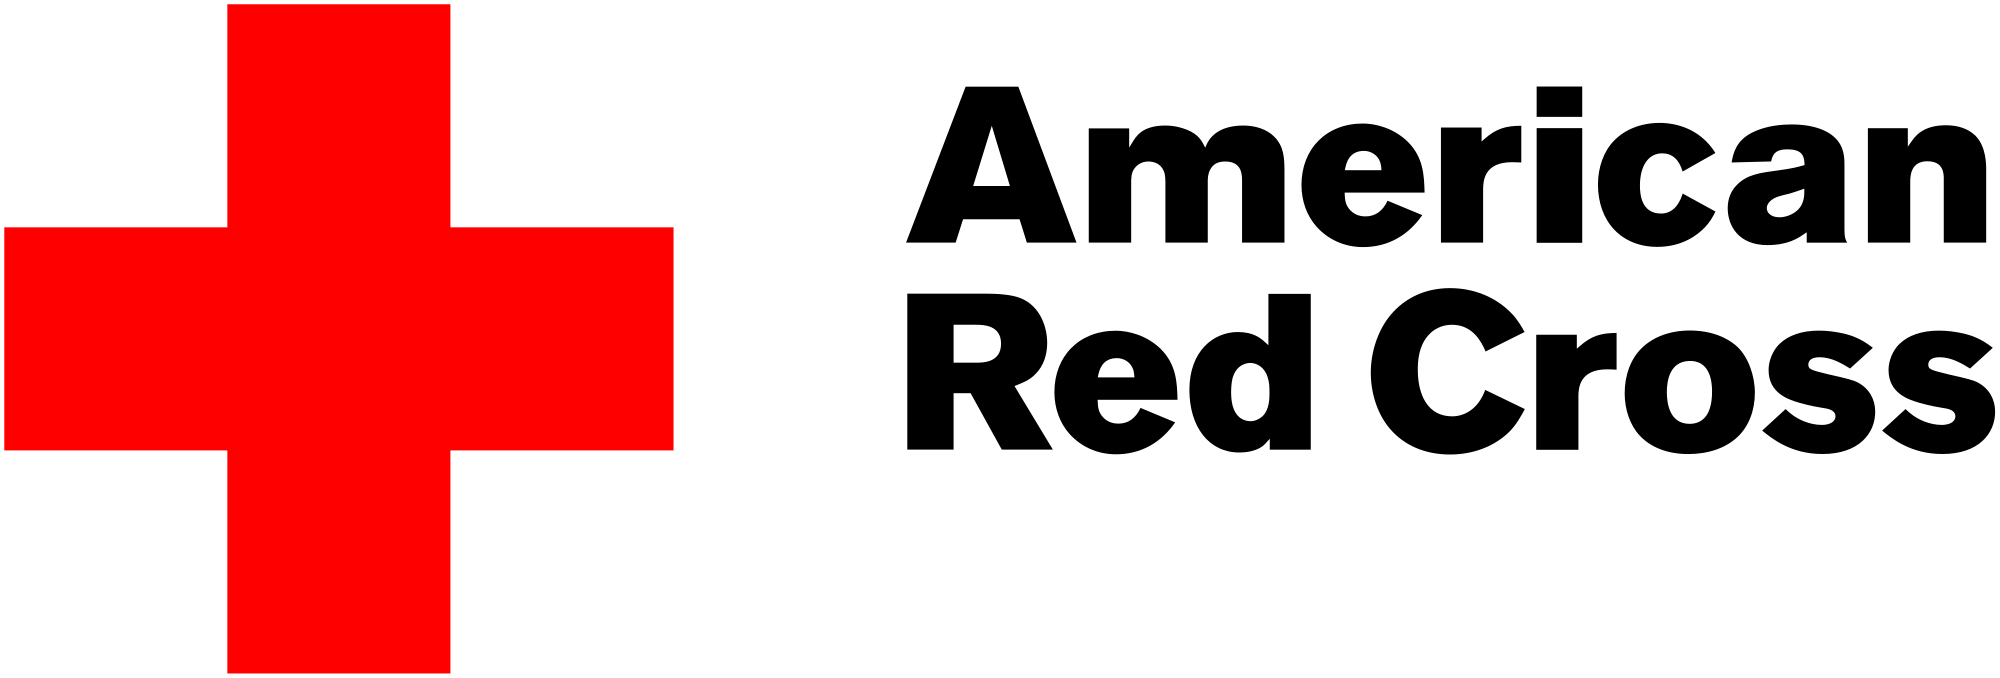 Printable Red Cross Logo - American Red Cross Logo.svg